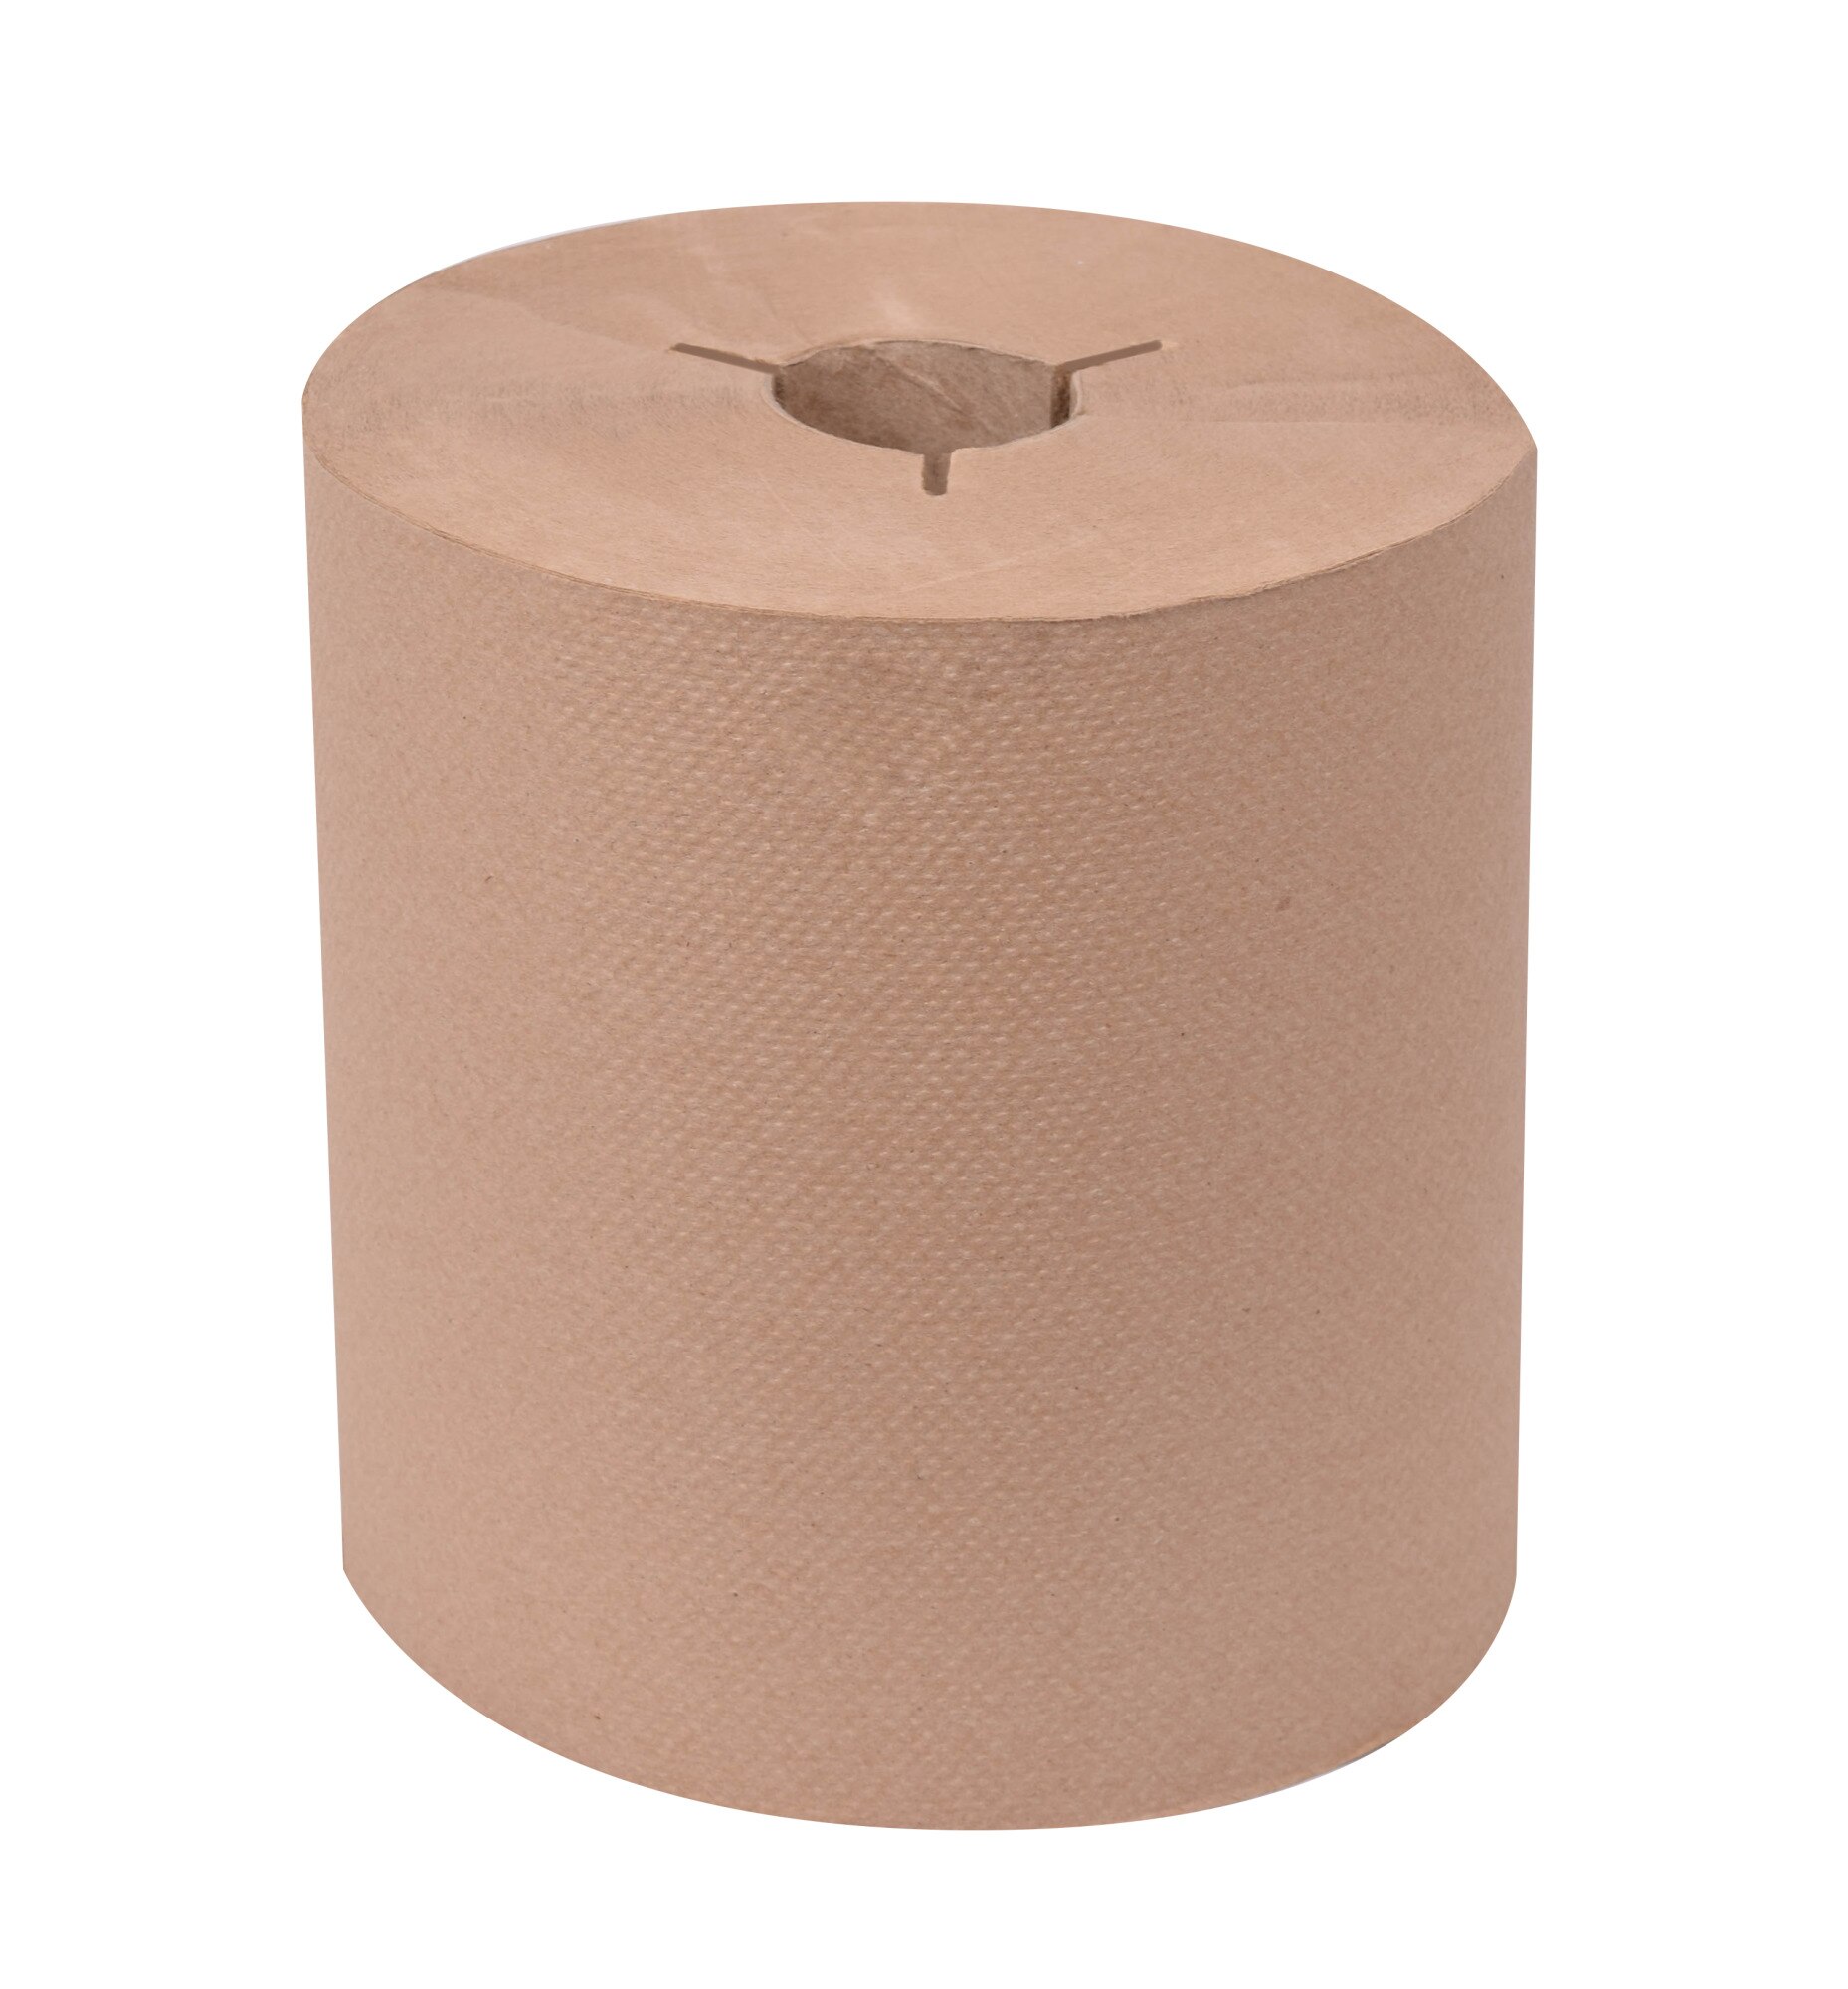 Tork 8030630 Premium Paper Hand Towel Roll Y Notch 8.0 Width x 600 Lenth 1-Ply White Case of 6 Rolls, 600 Feet per Roll, 3,600 Feet per Case 